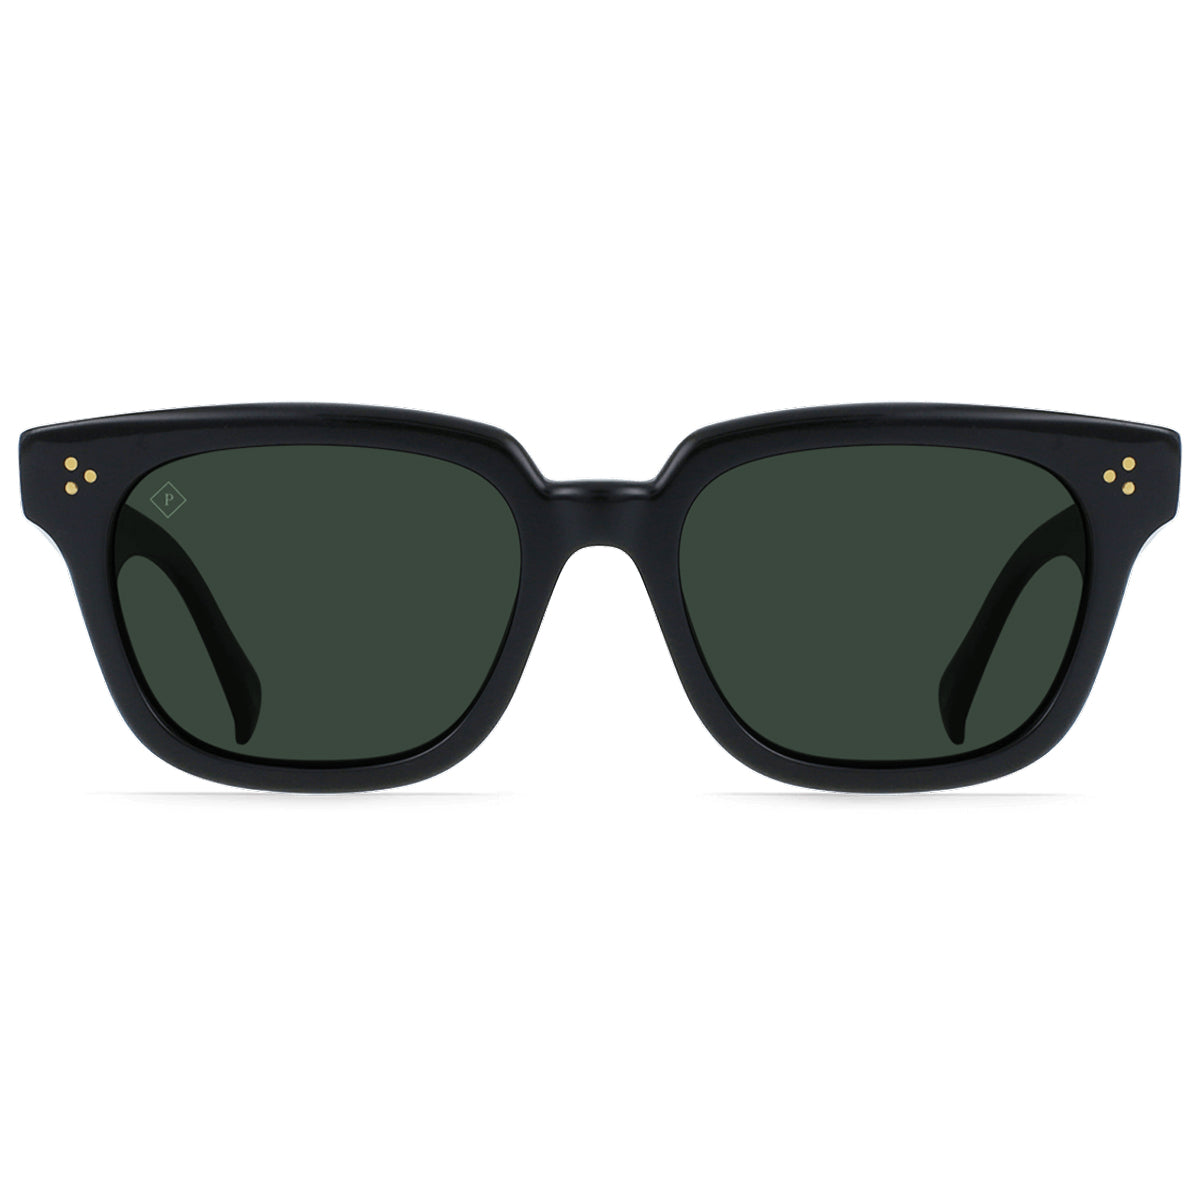 Raen Phonos Sunglasses - Recycled Black/Green Polarized - 52 image 2